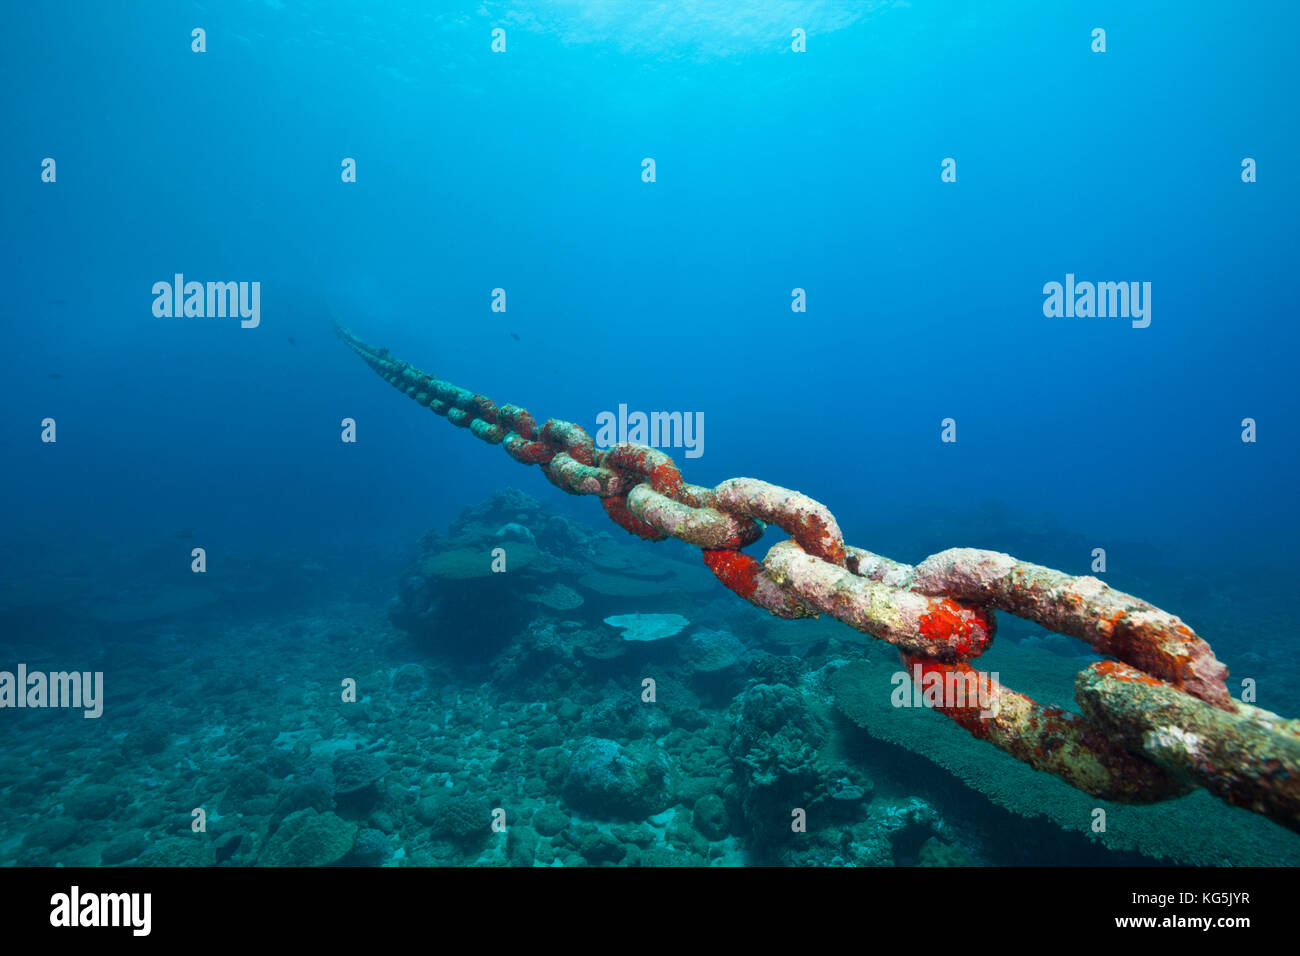 Chain of moored Buoy damages Reef, Christmas Island, Australia Stock Photo